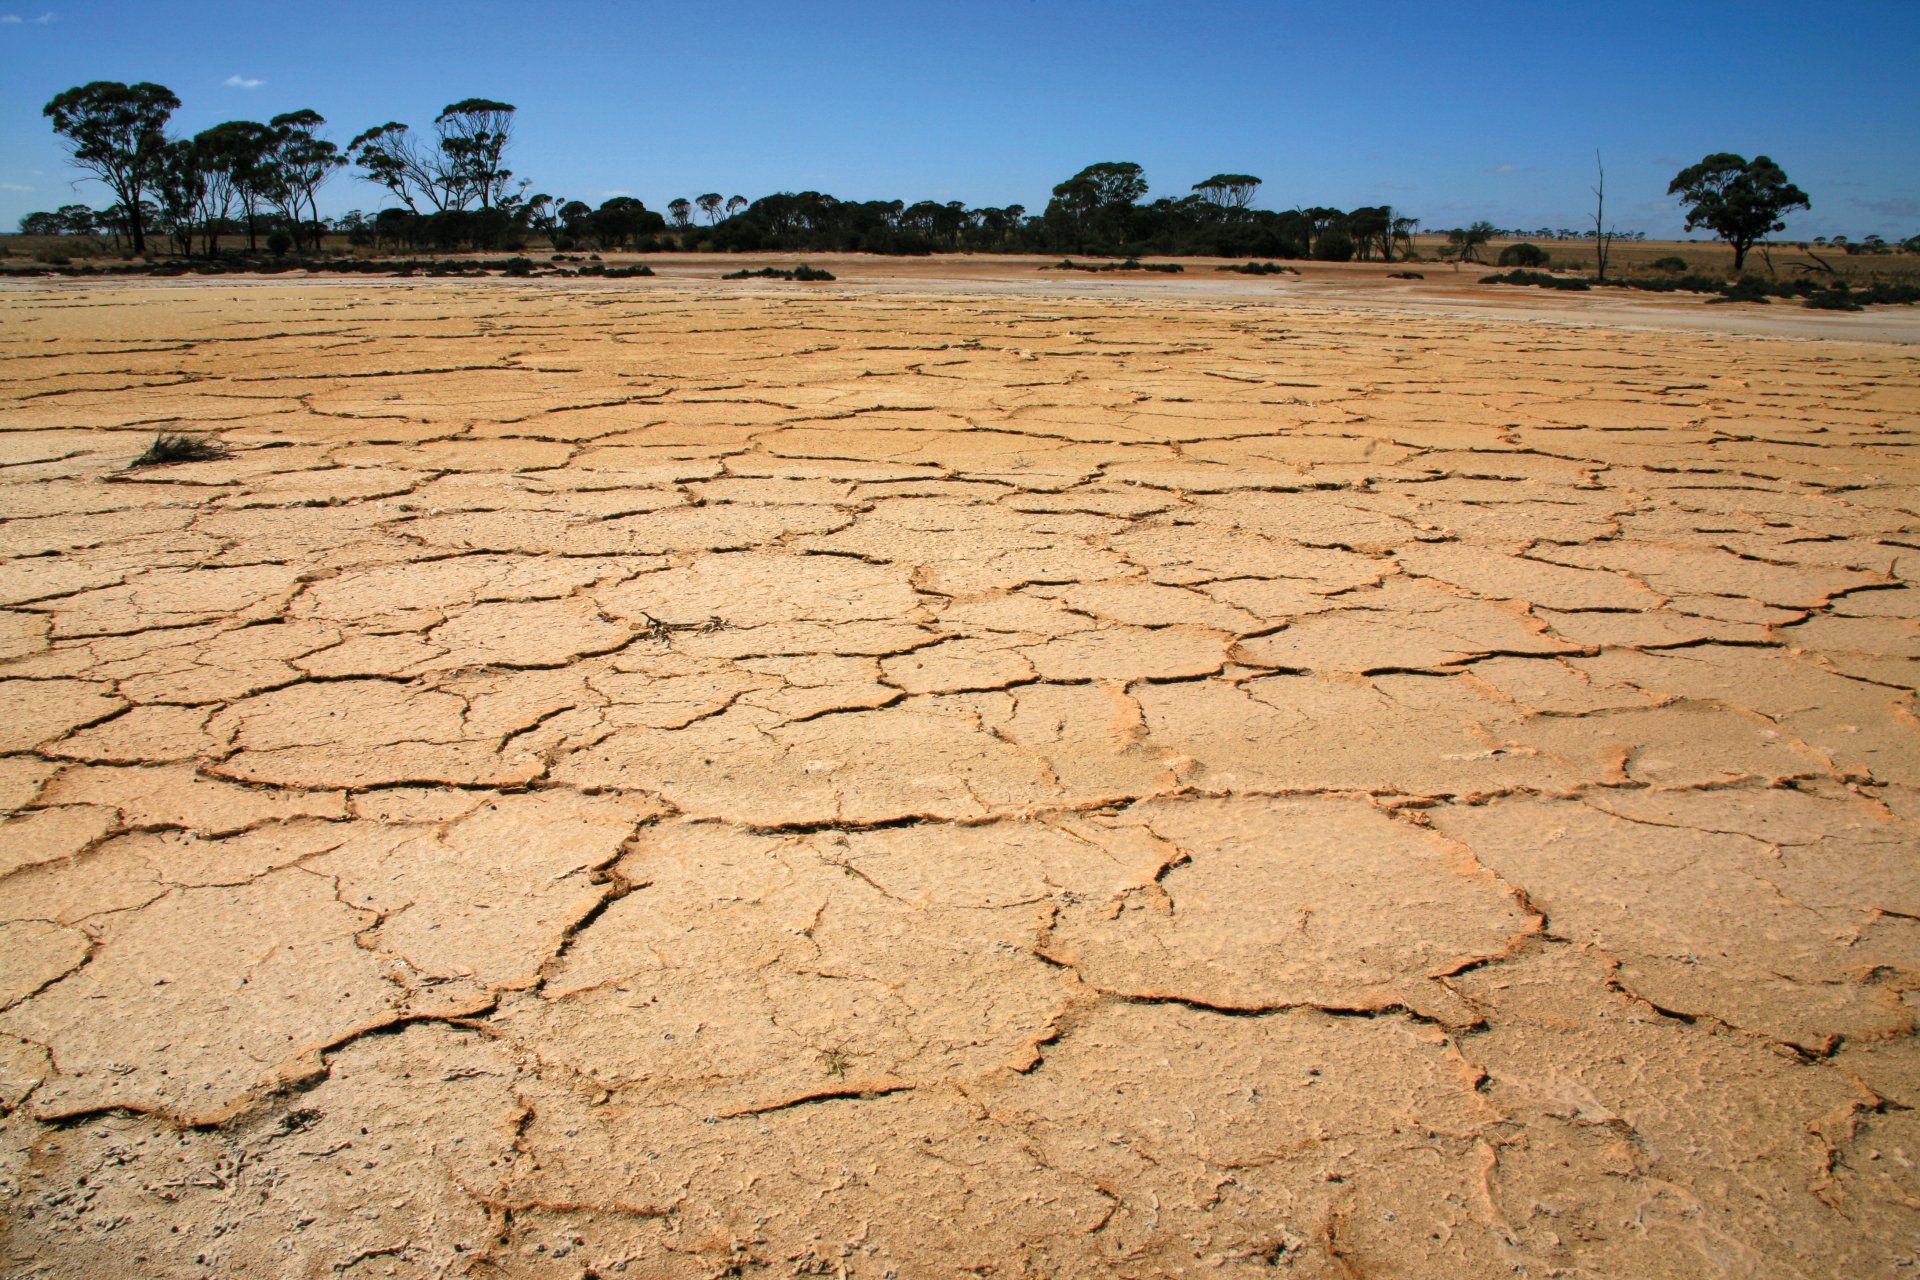 What should Australia do about drought?